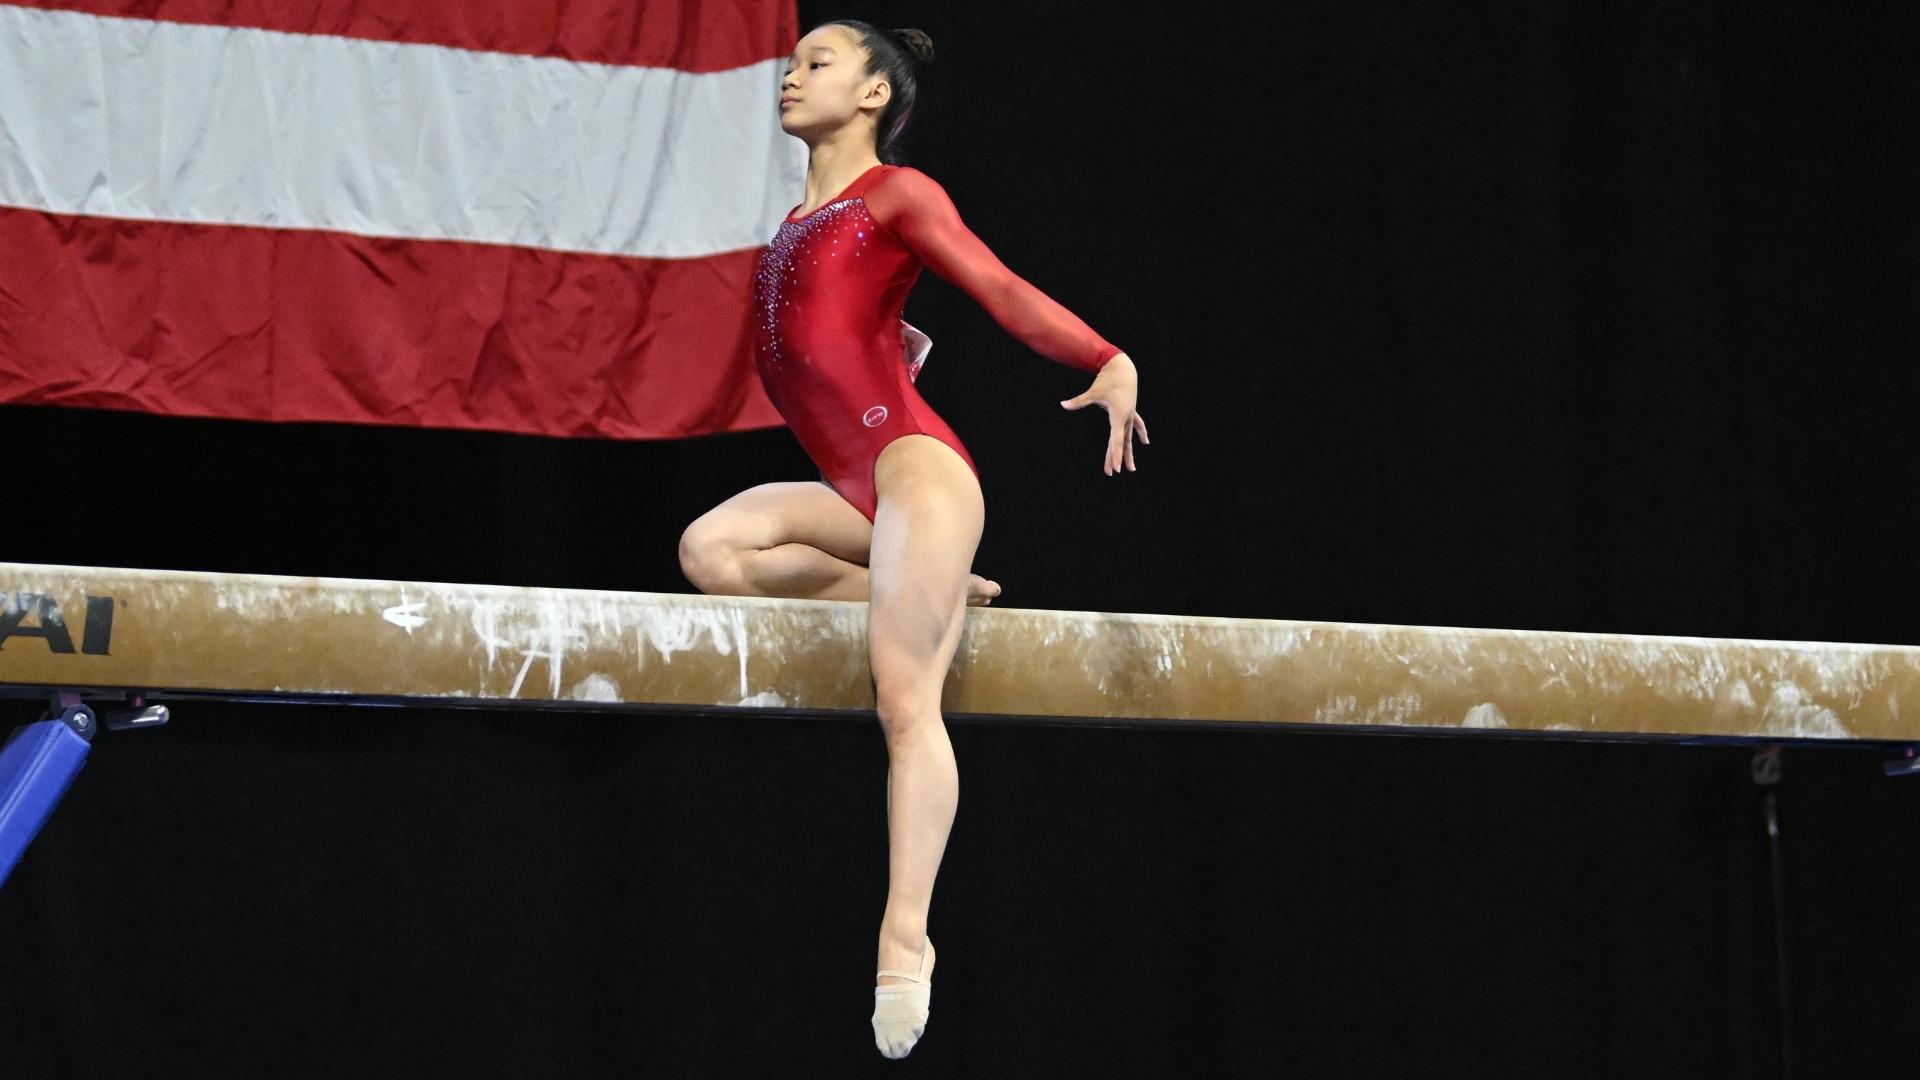 2022 OOFOS U.S. Gymnastics Championships - Junior Women Live Blog